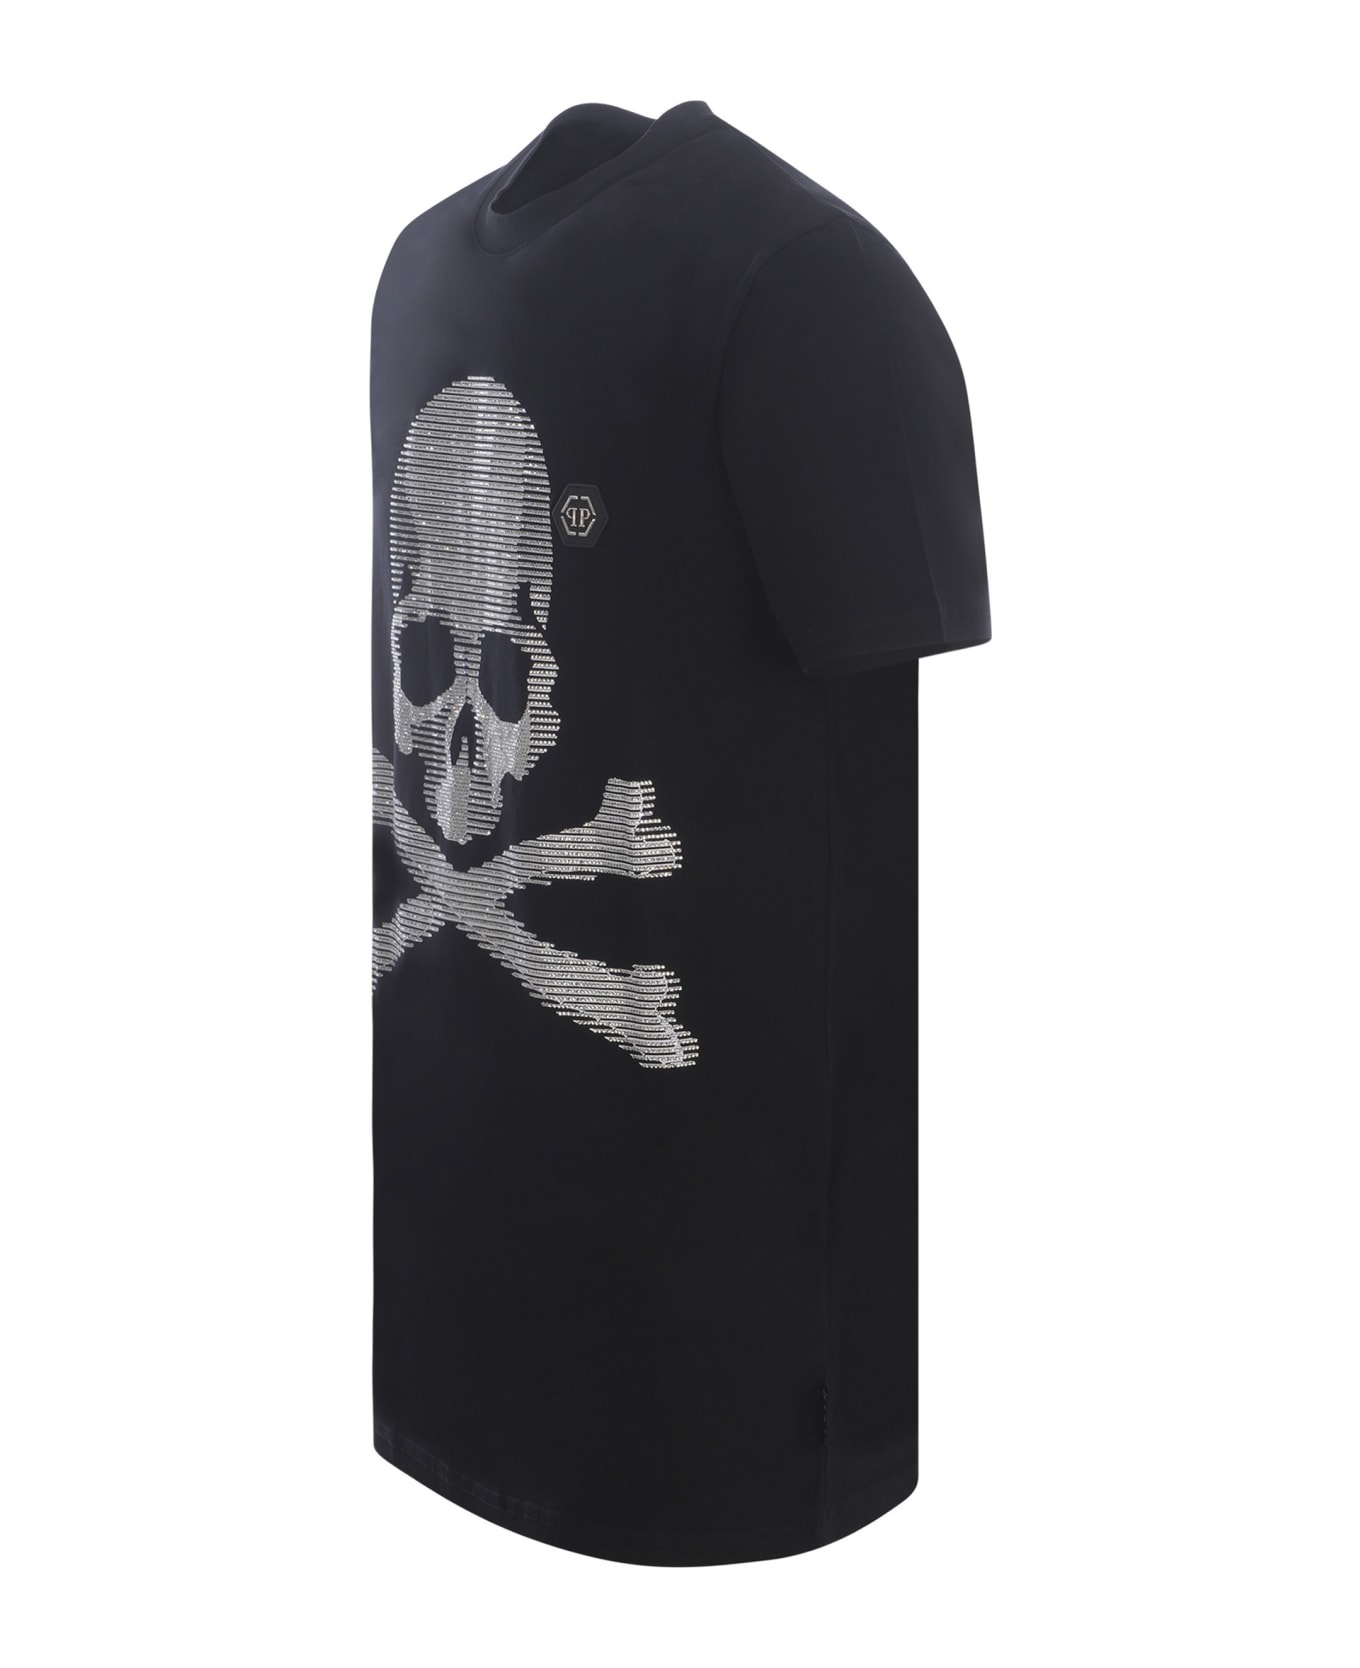 Philipp Plein T-shirt Philipp Plein "skull" In Cotton - Nero